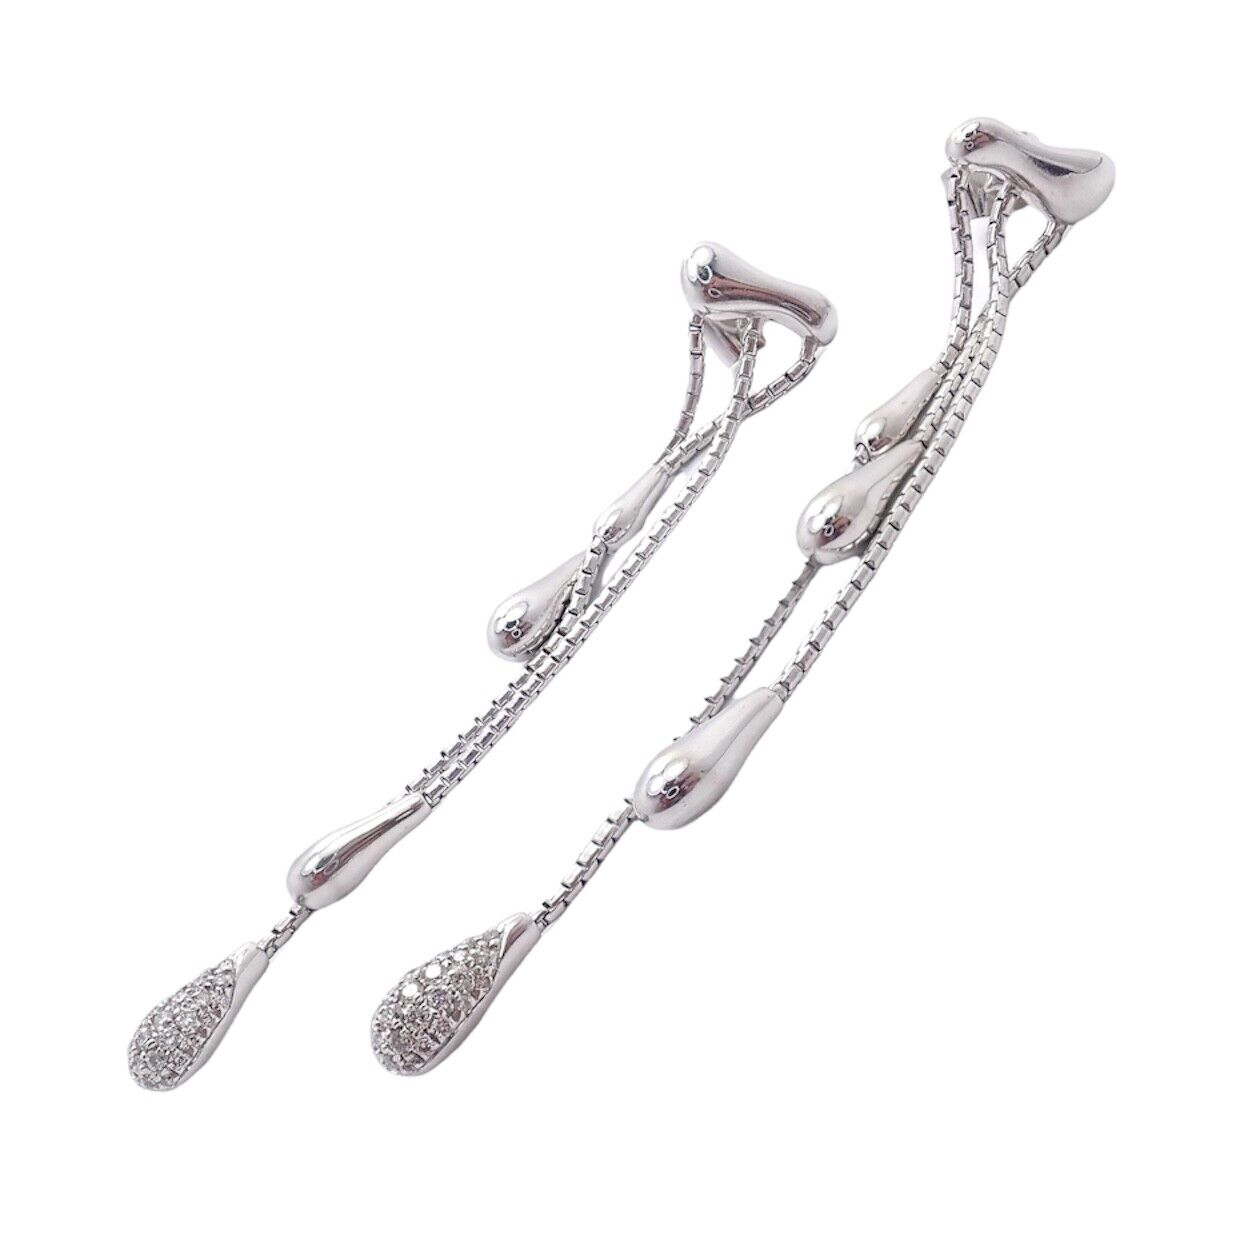 Teardrop Hoop Studs Earrings with Extra Long Chain Backs – i.a.m